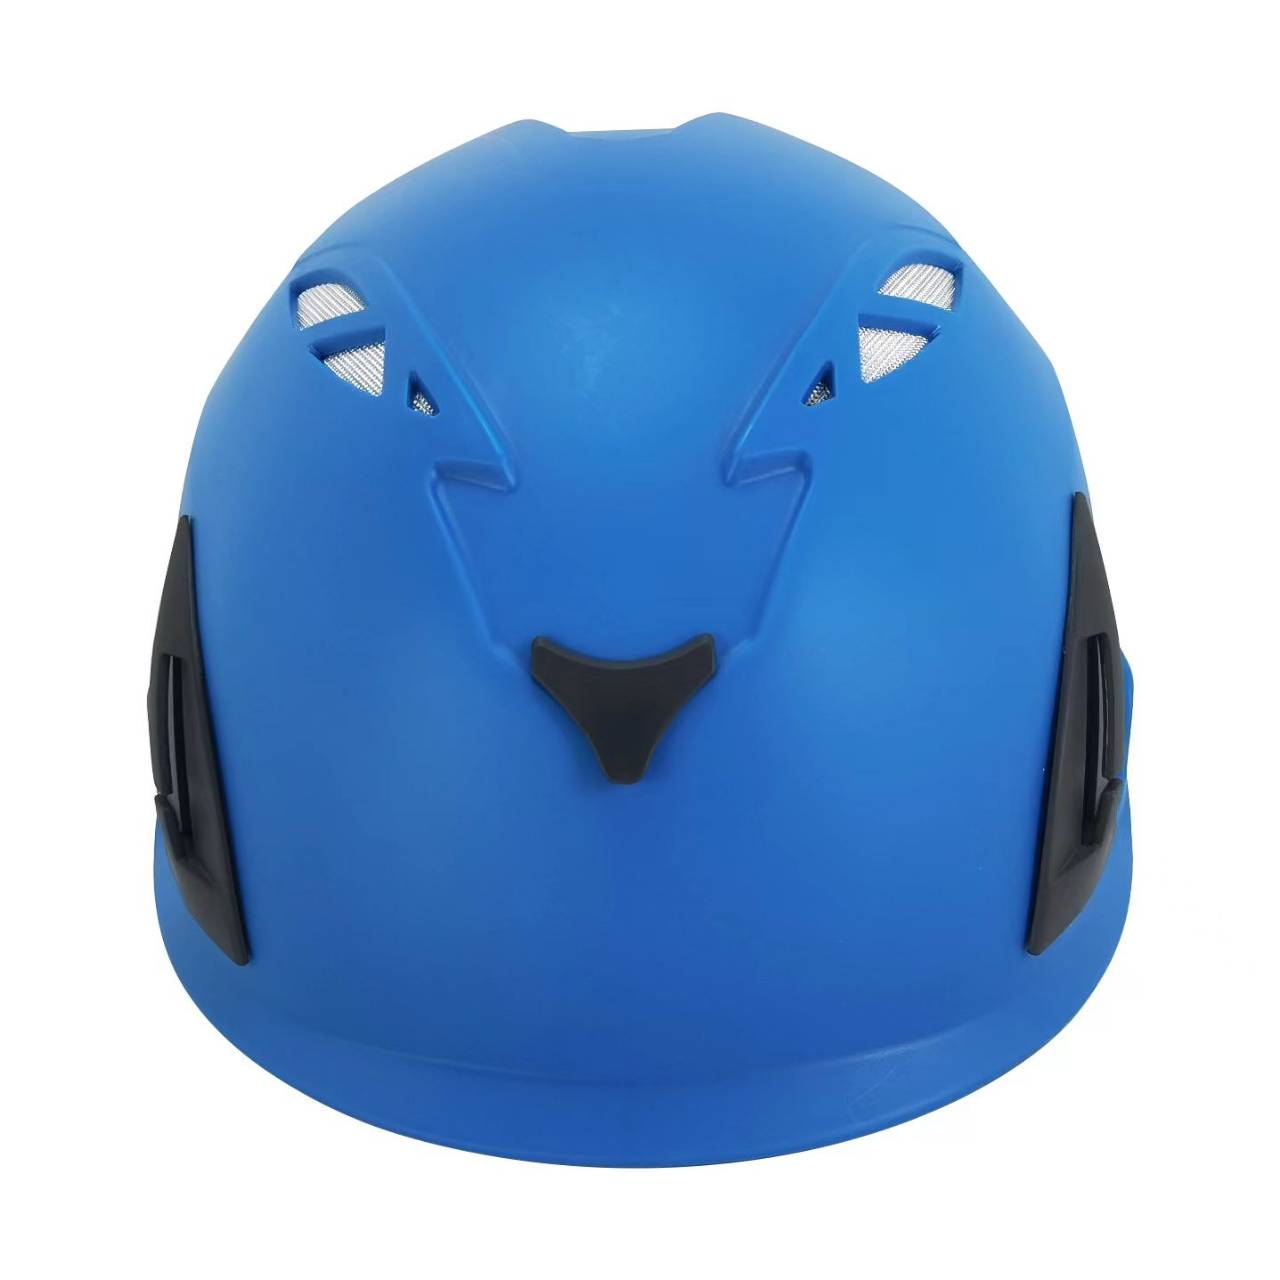 AU-M02ALPINE攀岩用安全頭盔